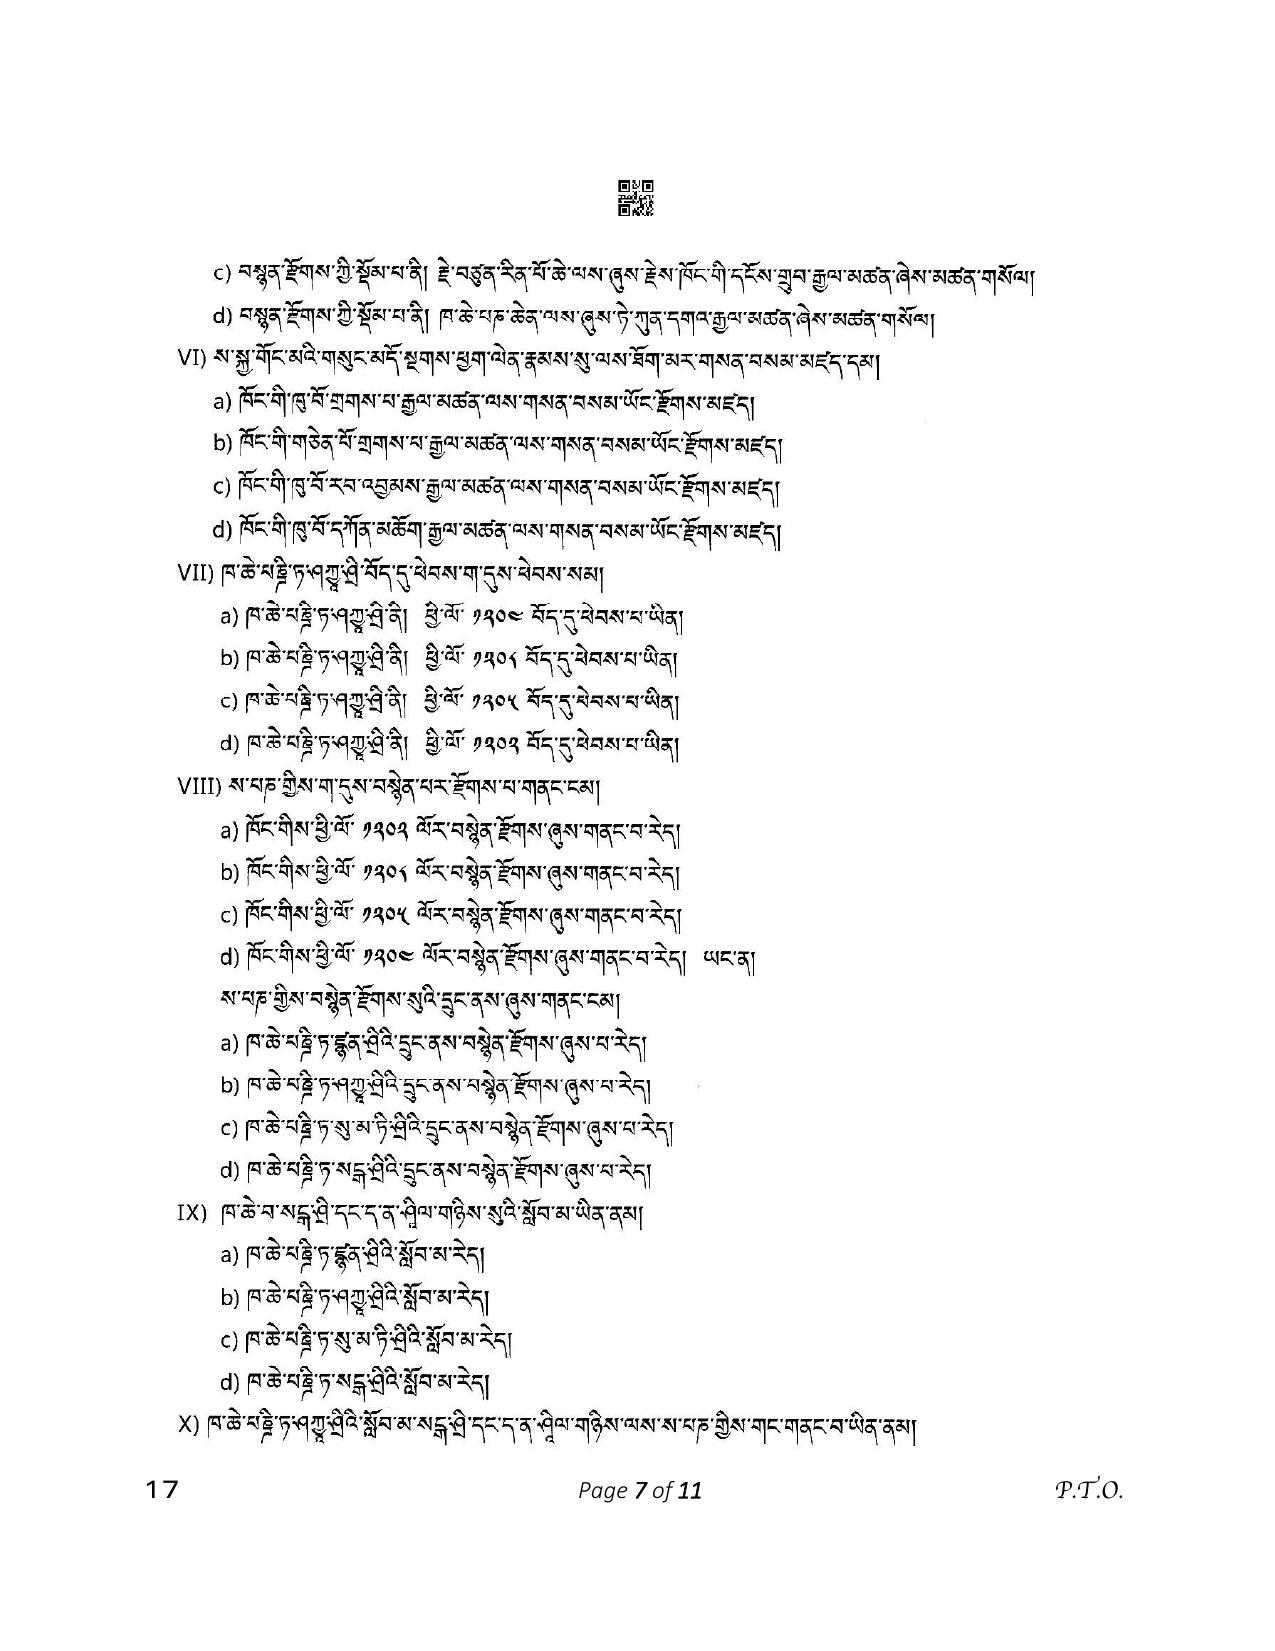 CBSE Class 12 17_Tibetan 2023 Question Paper - Page 7